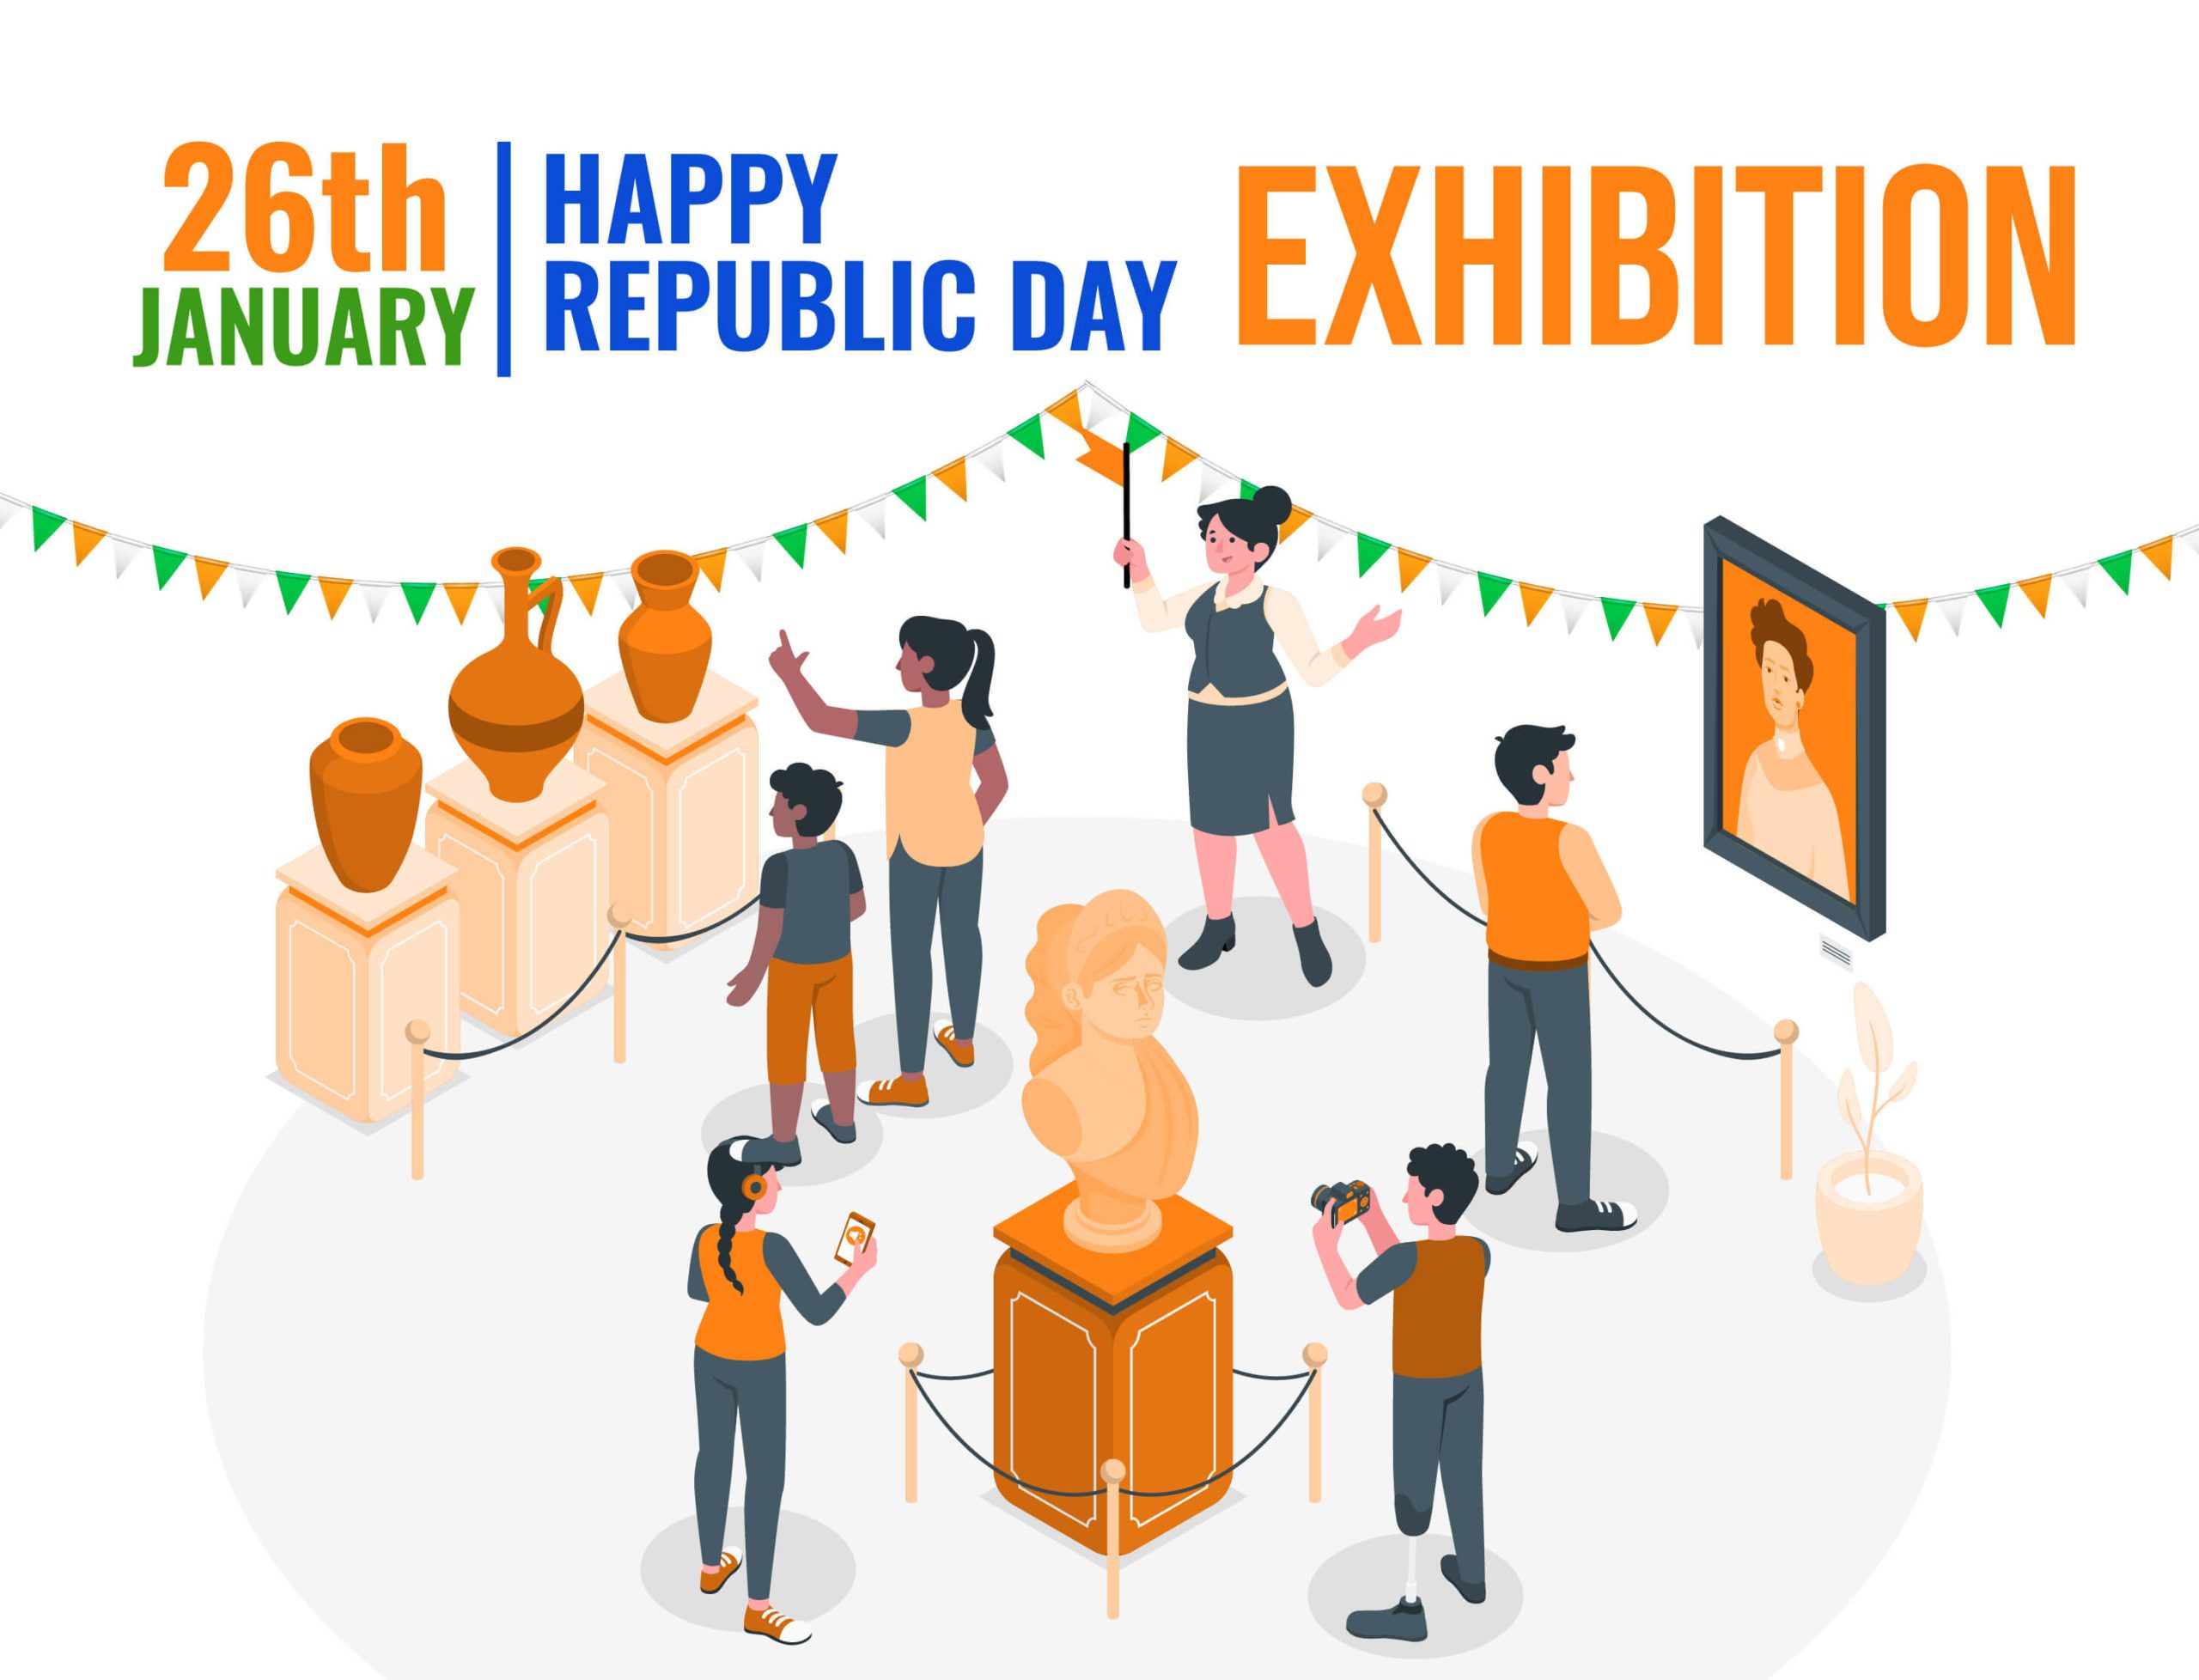 Republic Day Exhibition